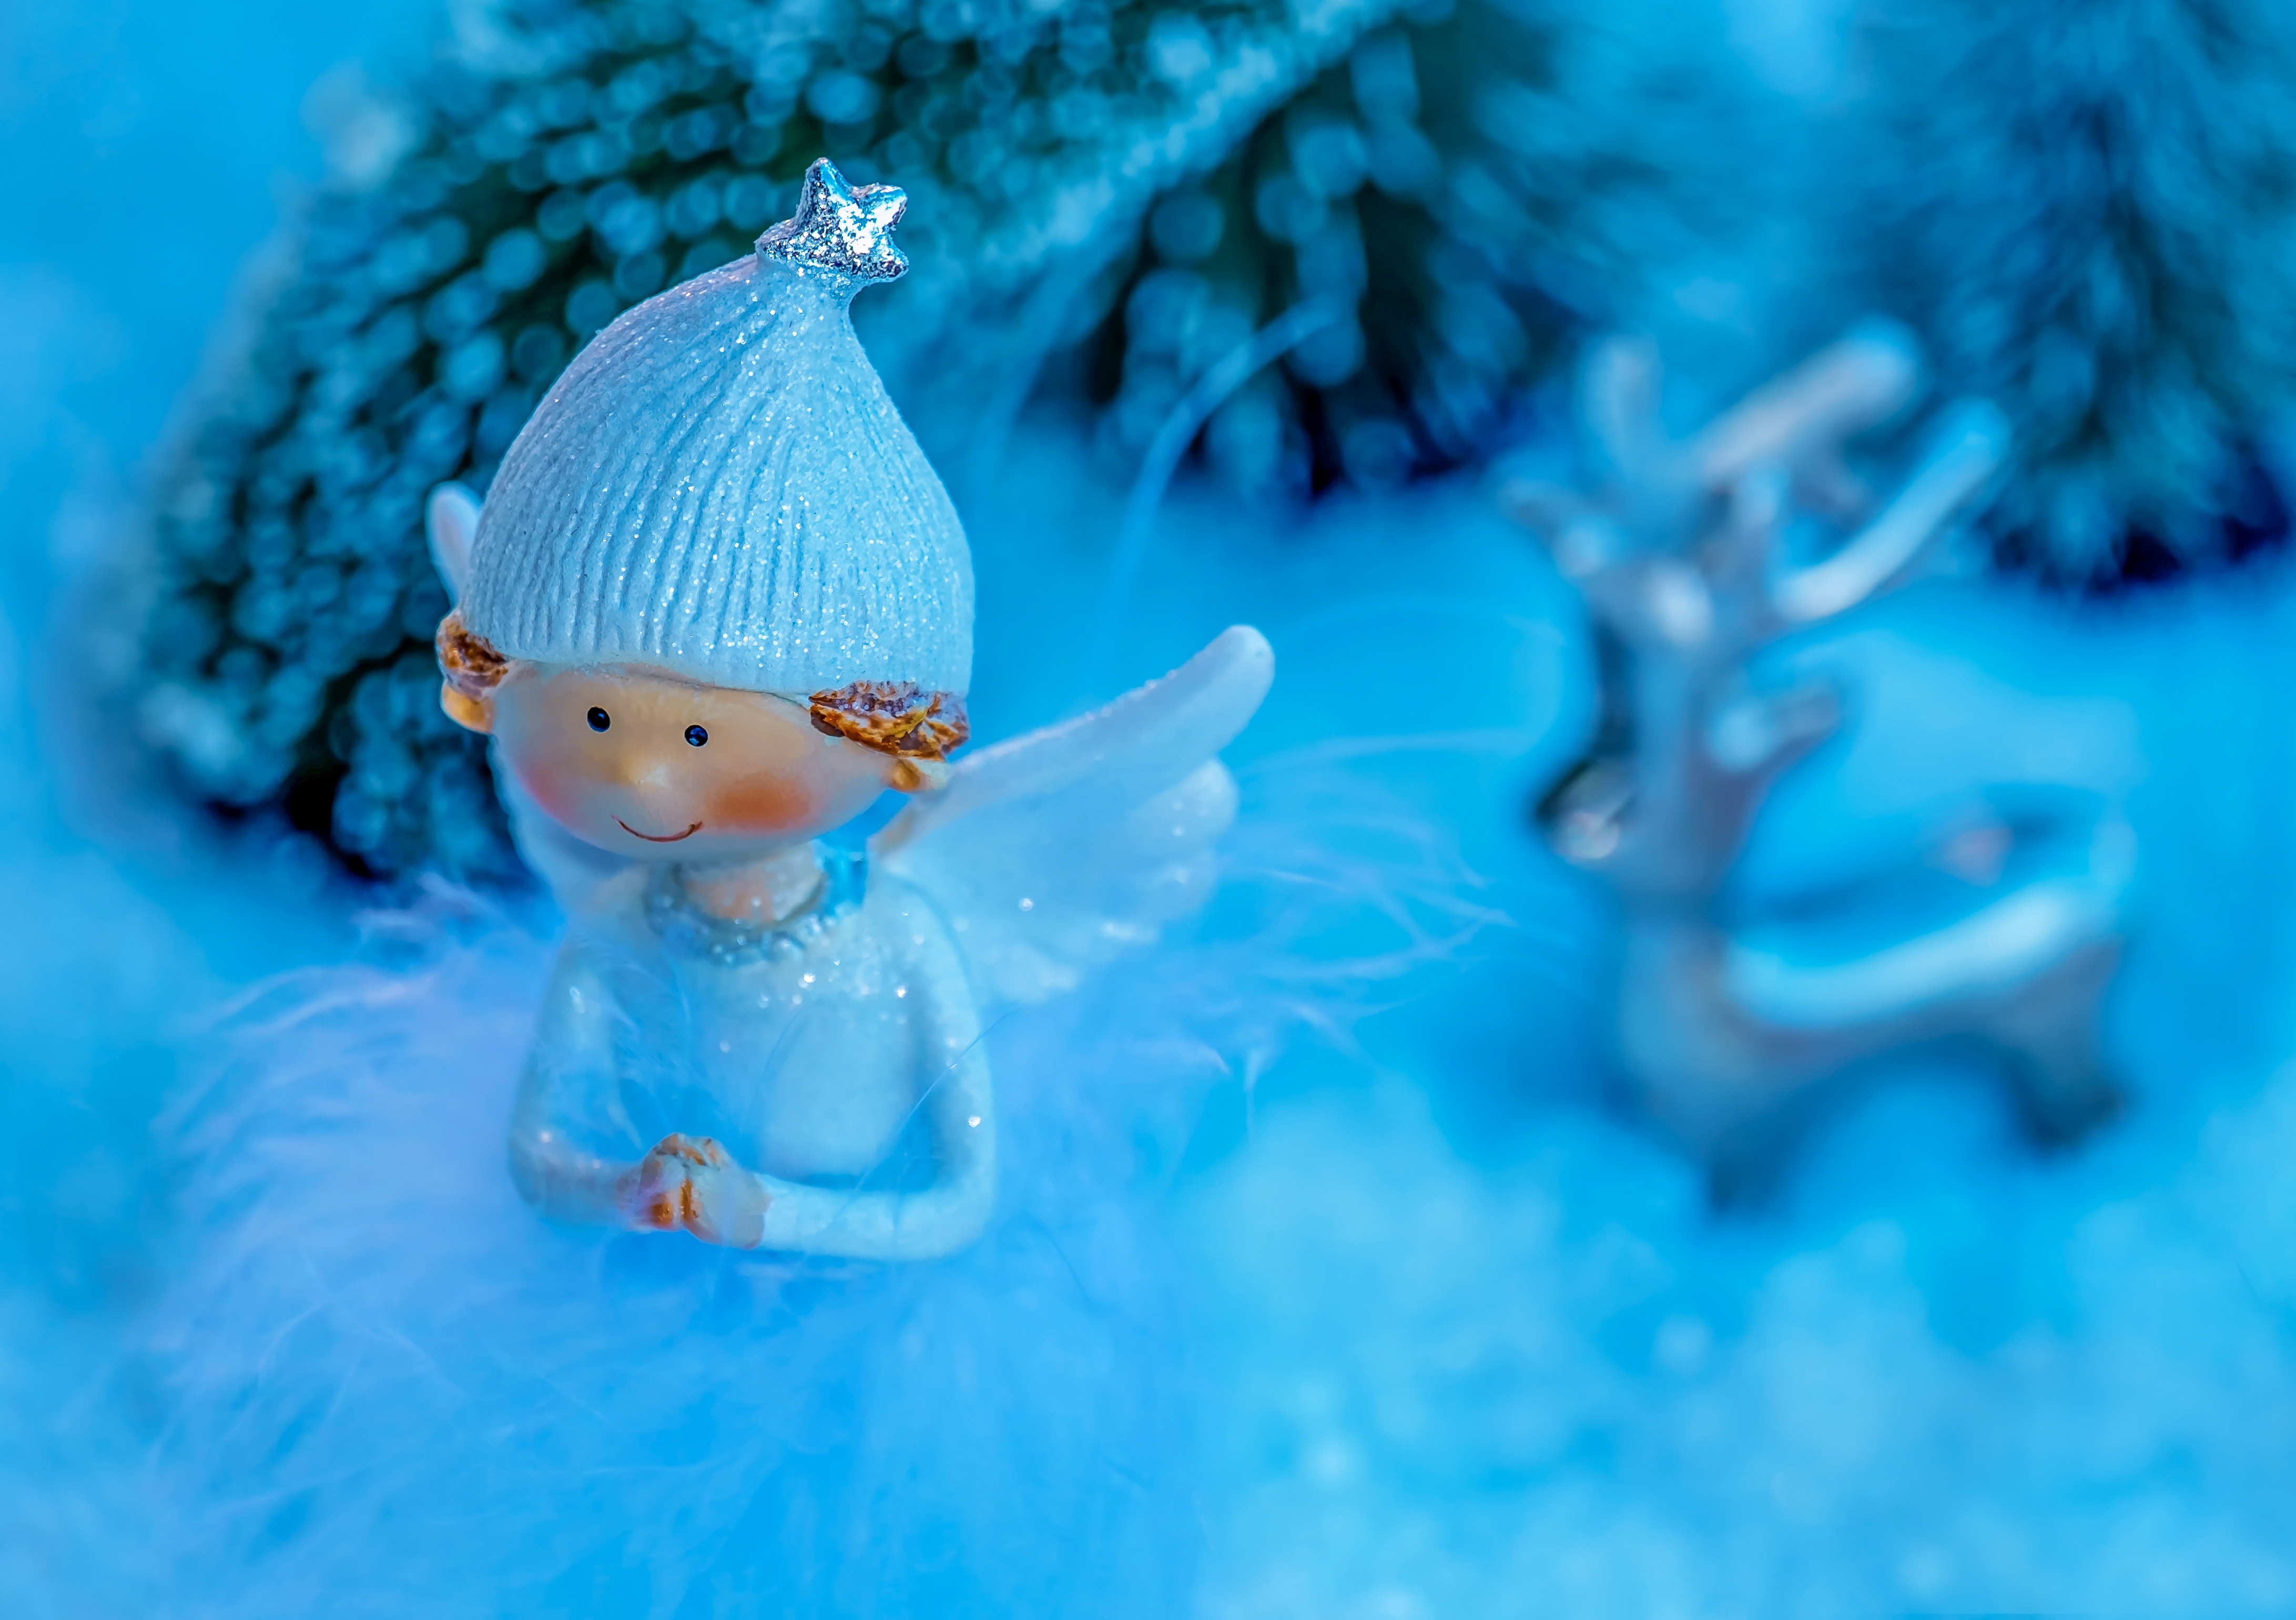 HD wallpaper, Christmas Decoration, Wings, Blue Angel, Blue Background, Cute Figure, Cap